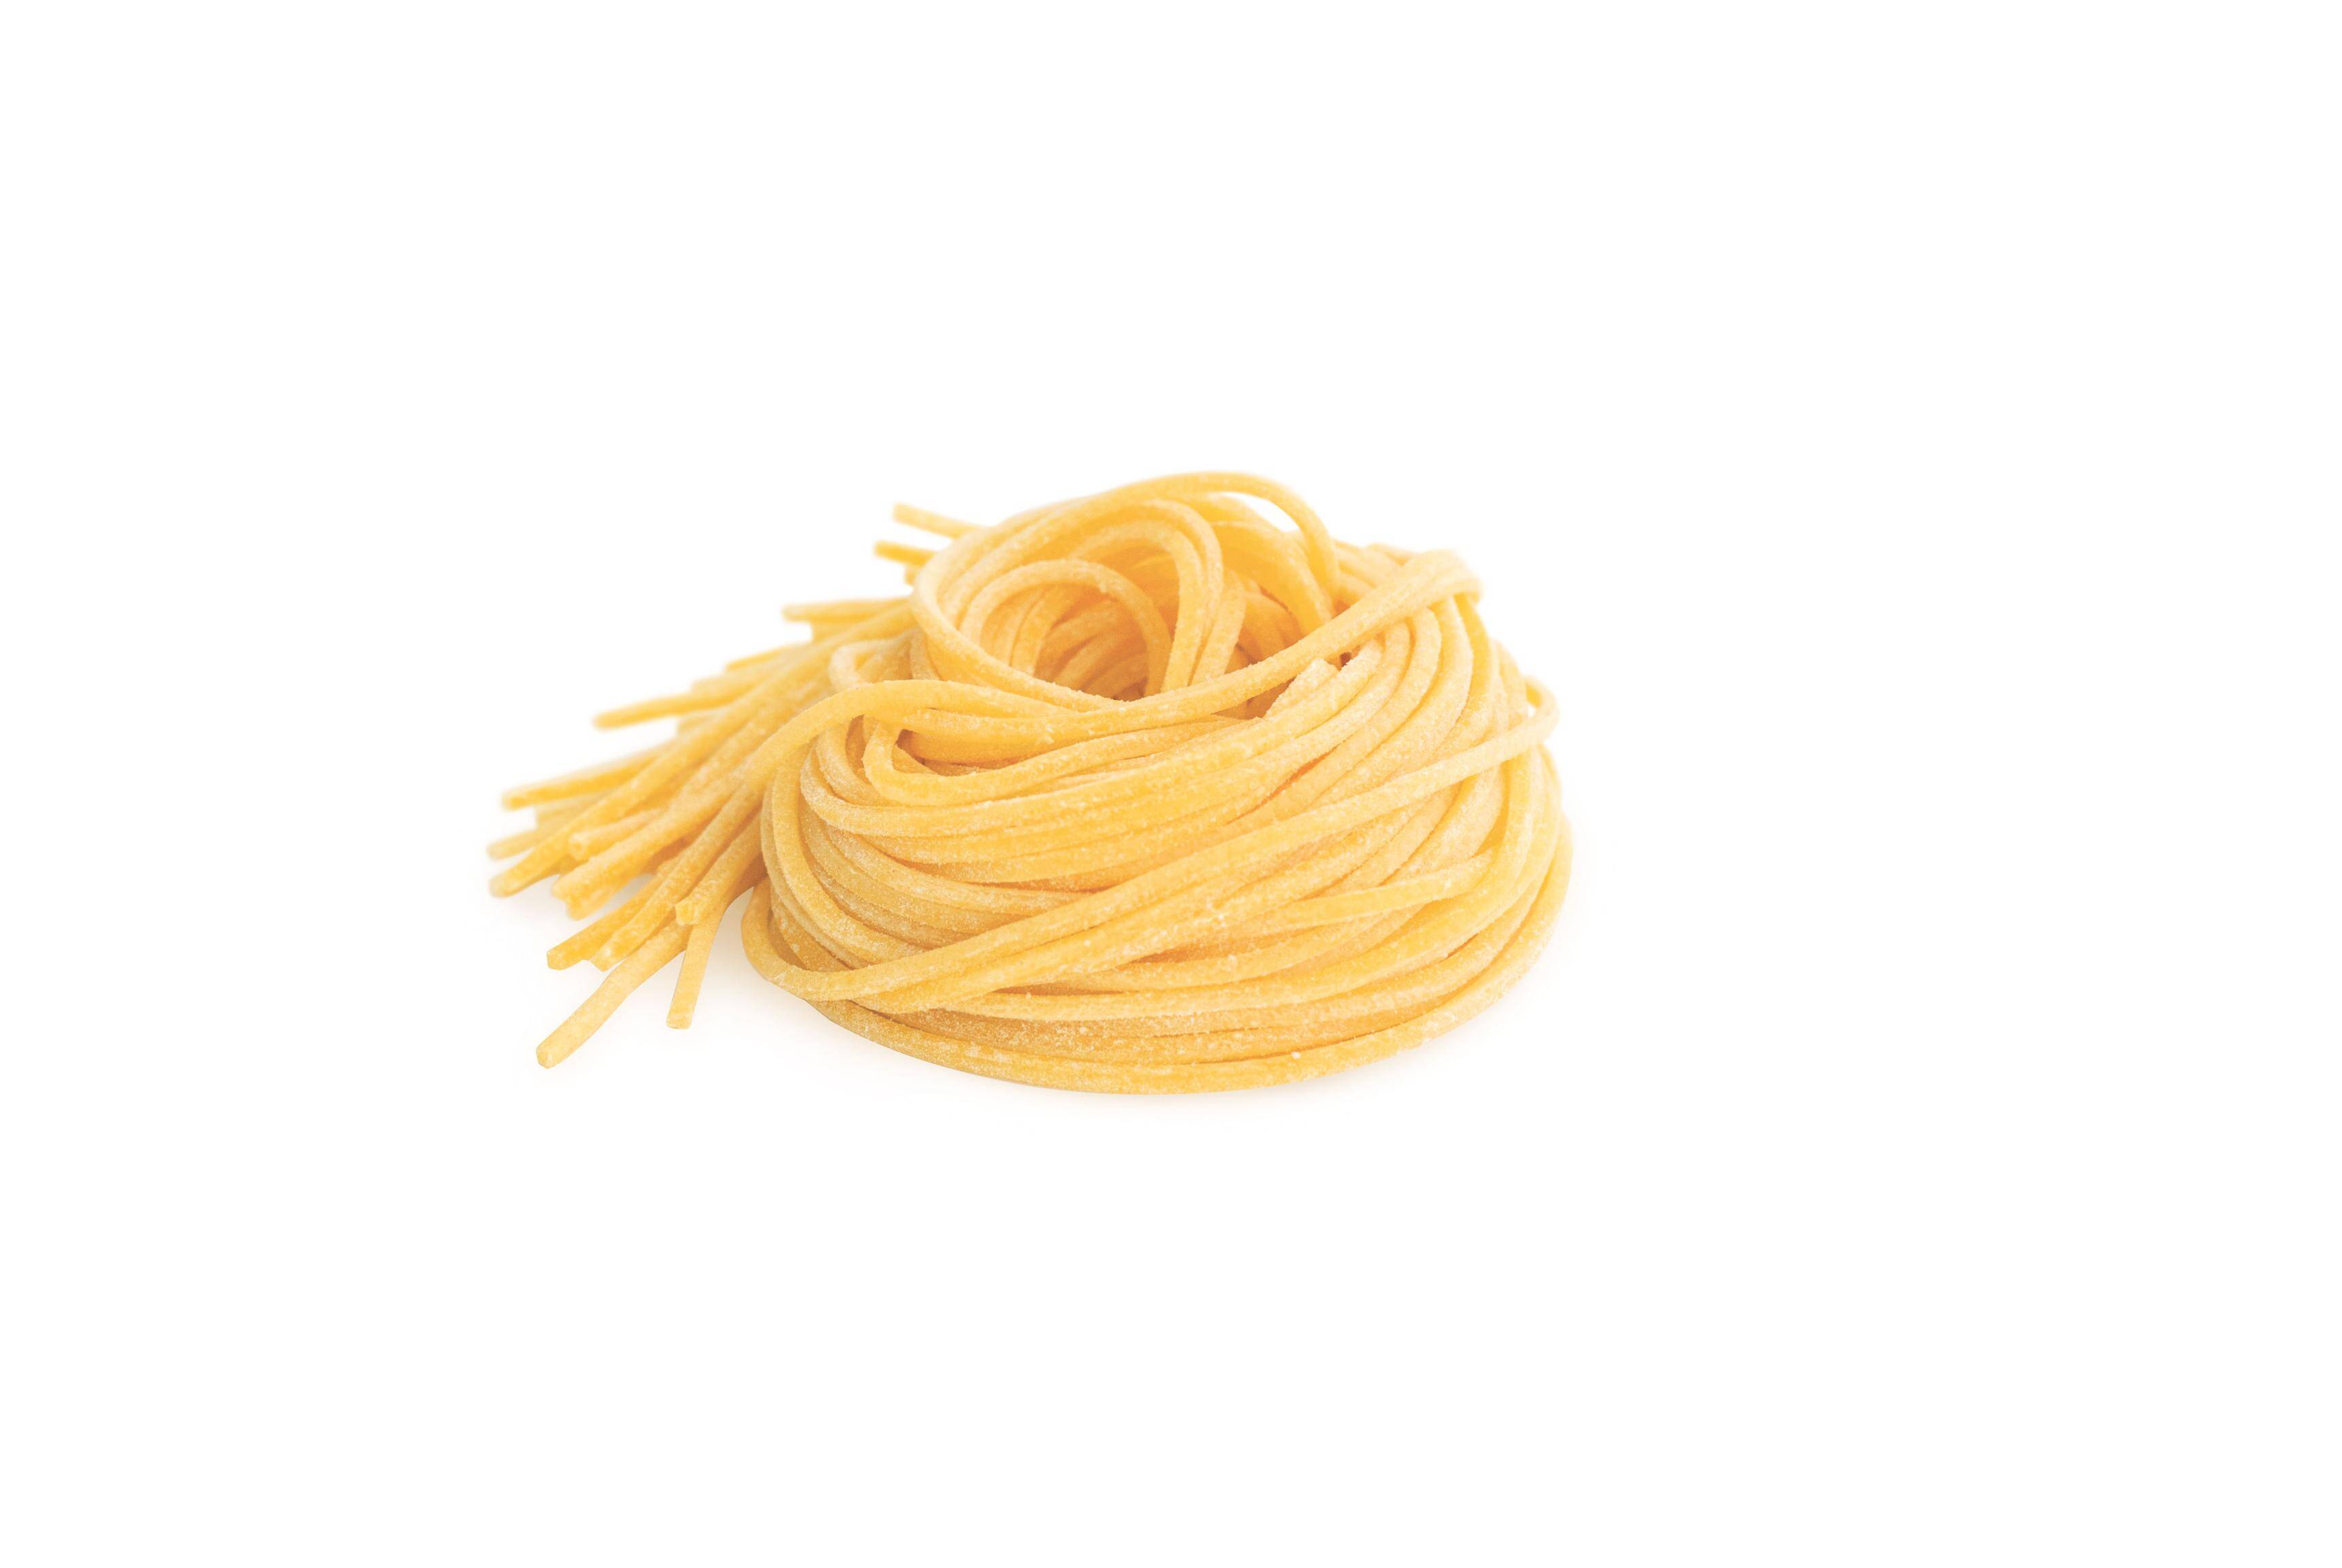 Makaron Spaghetti alla Chitarra (2mm,125g/szt) 2kg/krt mroż.Perino